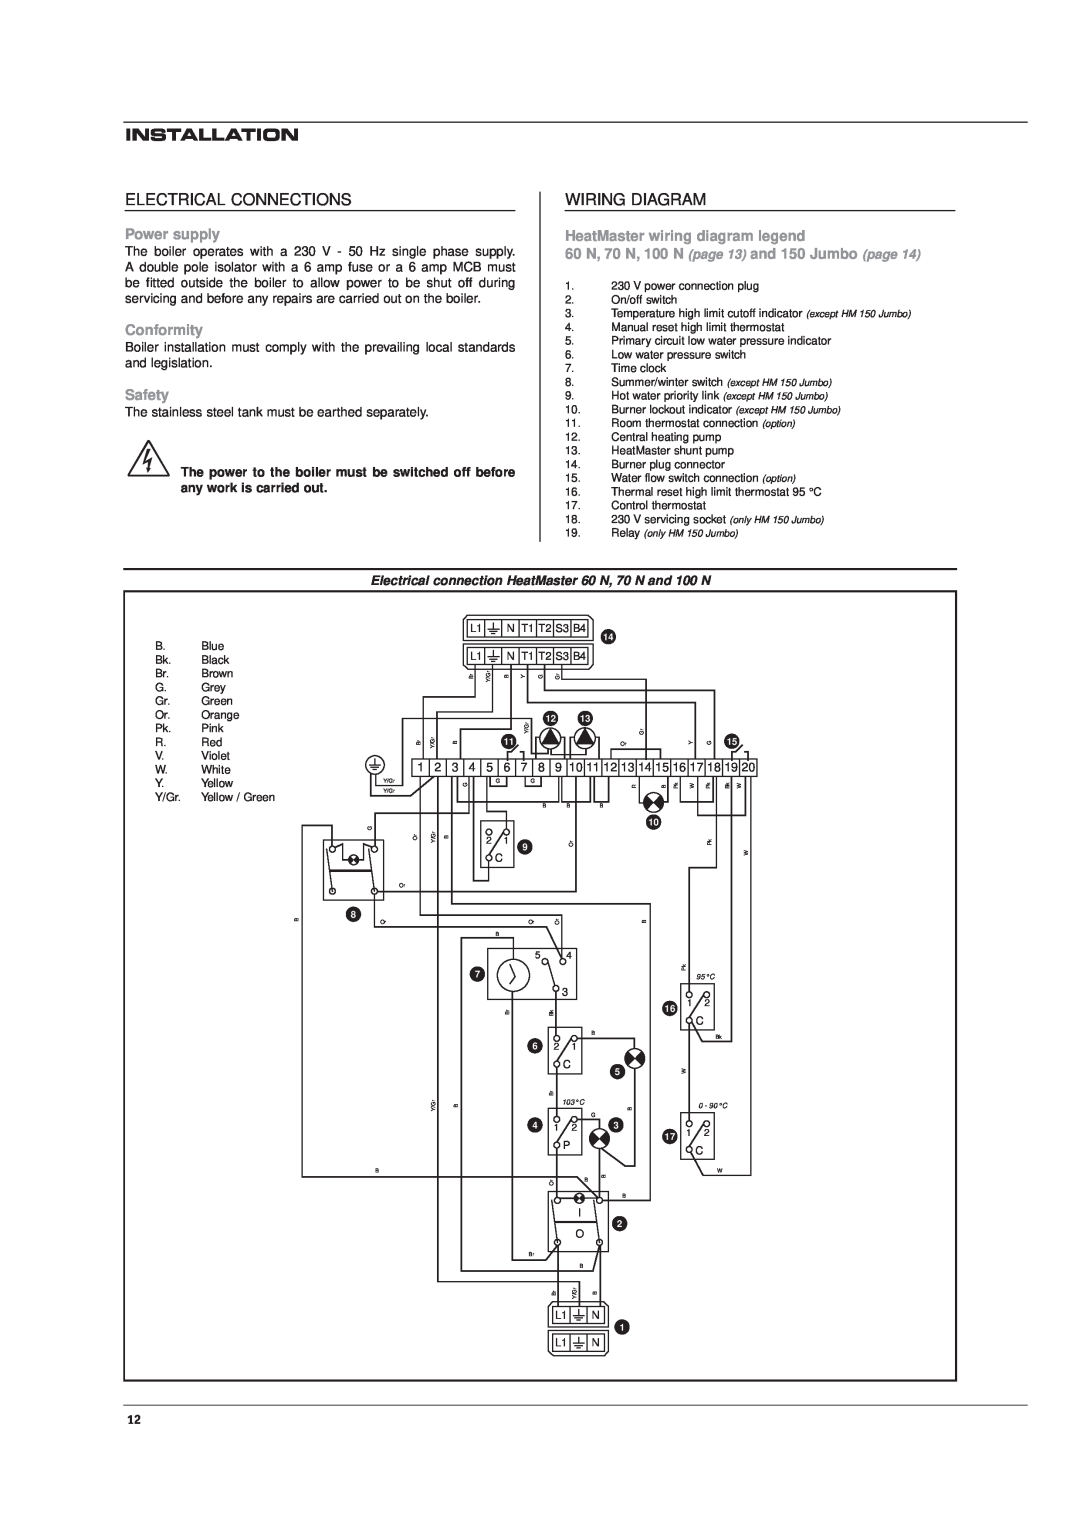 Heatmaster 150 JUMBO, HM 60 N, 100 N, 70 N Installation, Power supply, Conformity, Safety, HeatMaster wiring diagram legend 